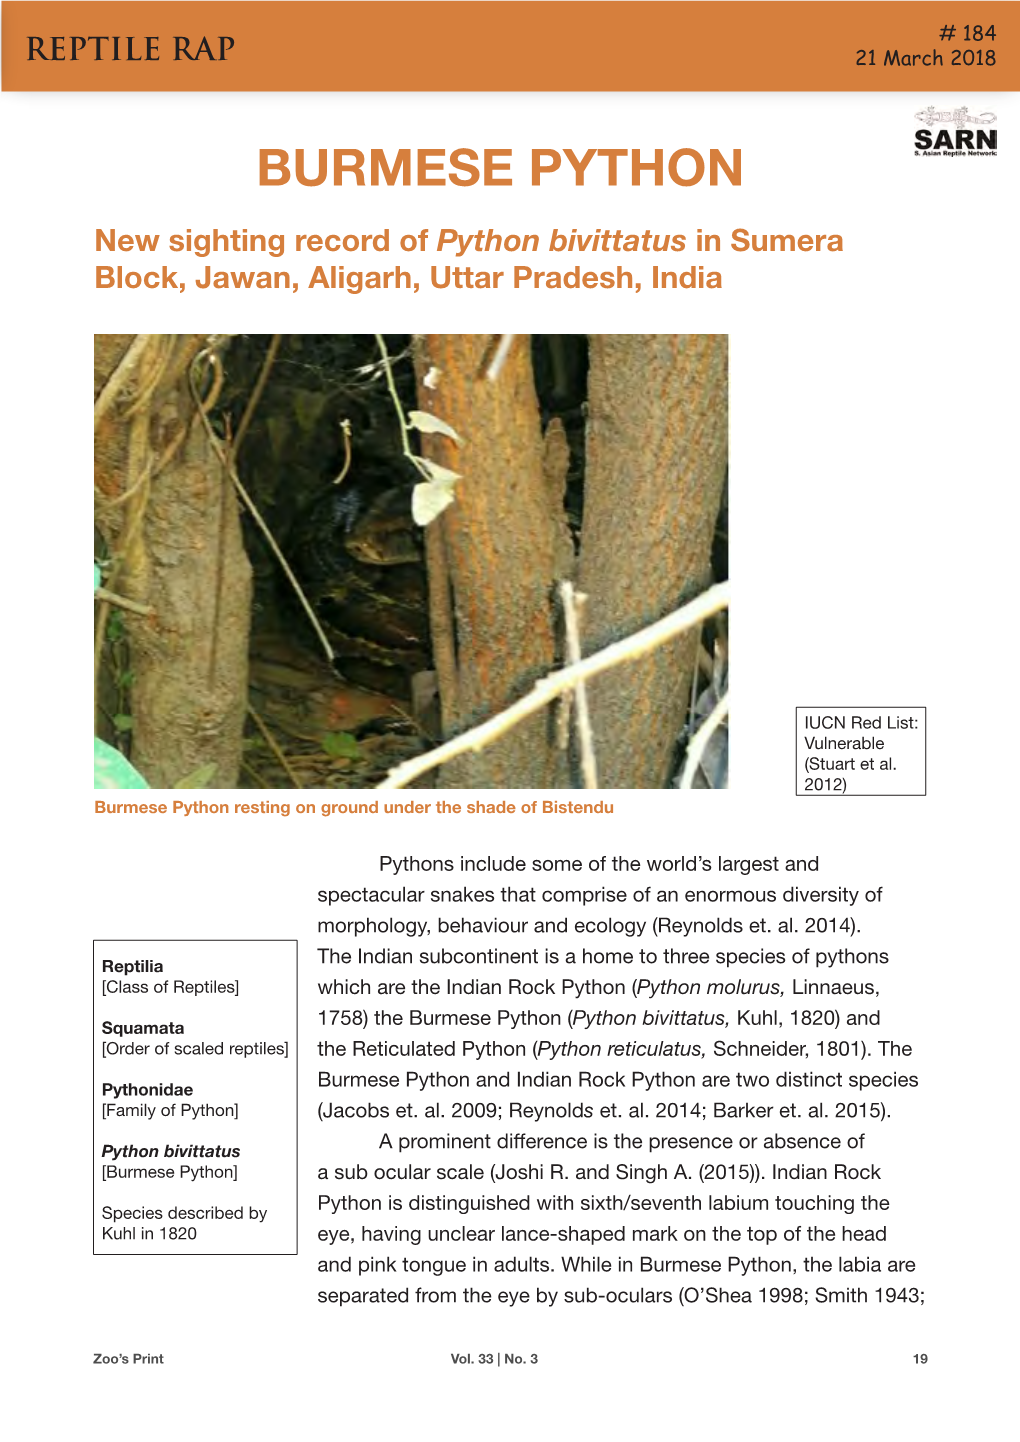 BURMESE PYTHON New Sighting Record of Python Bivittatus in Sumera Block, Jawan, Aligarh, Uttar Pradesh, India